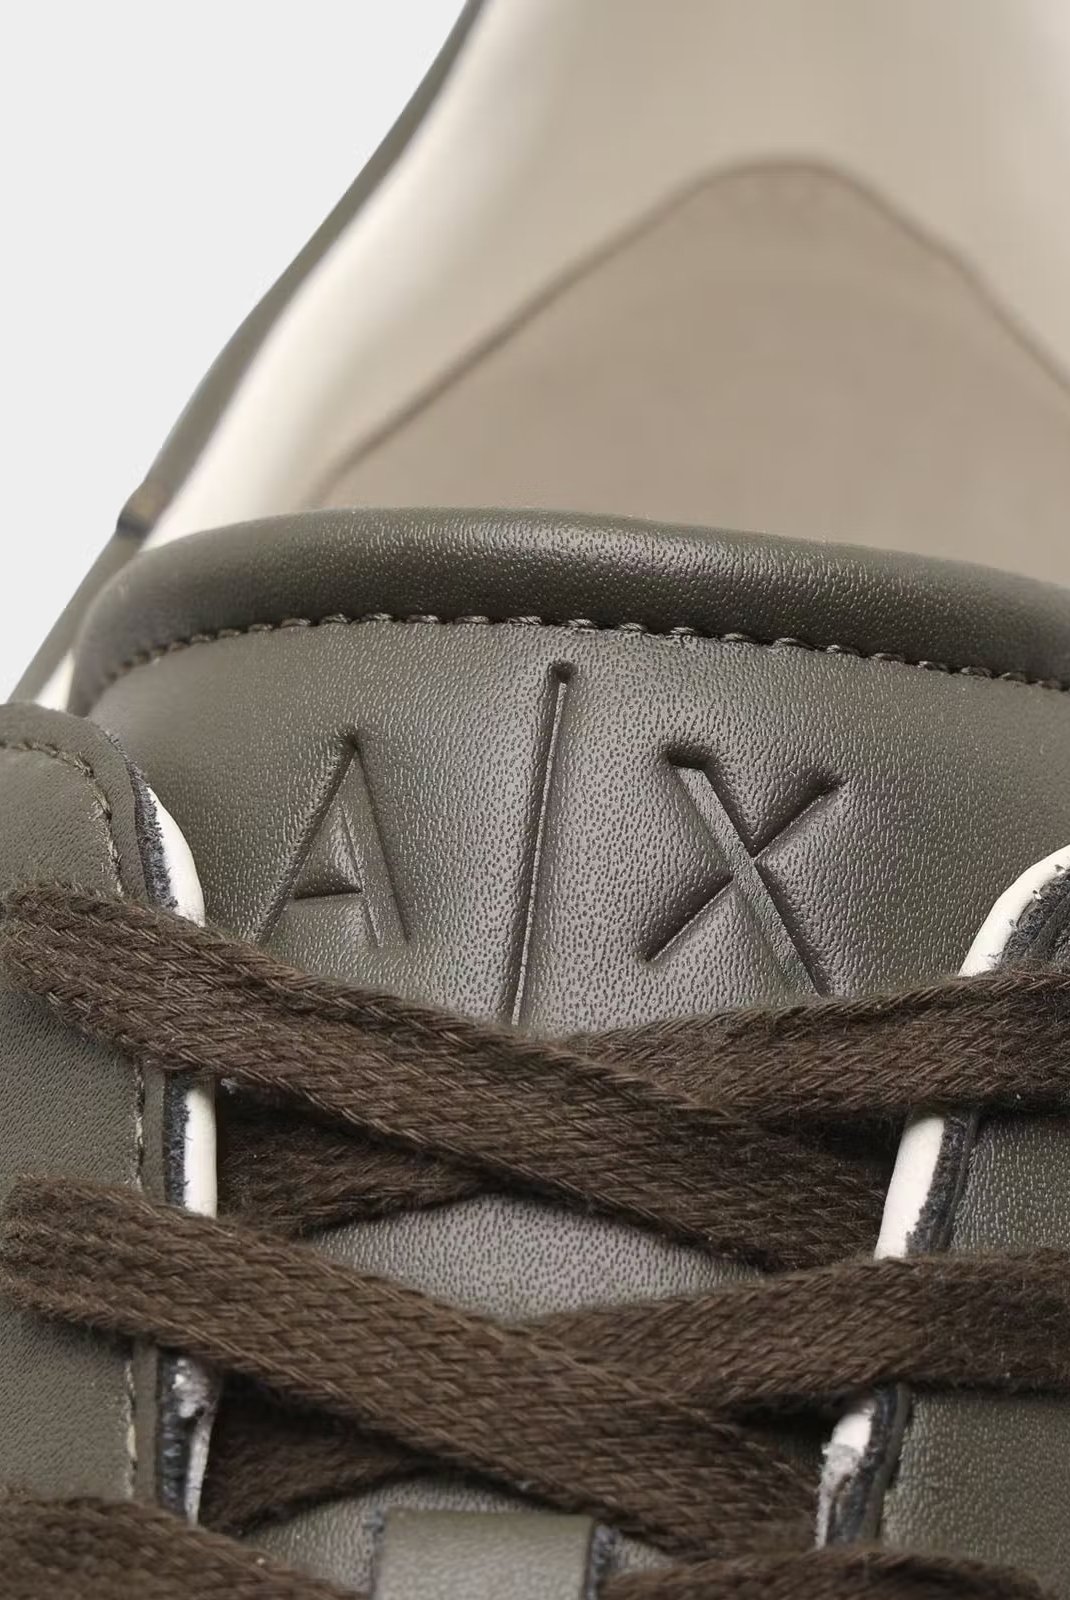 Sneakers / Sport  Armani exchange XUX001 XV093 K728 OLIVE+OLIVE